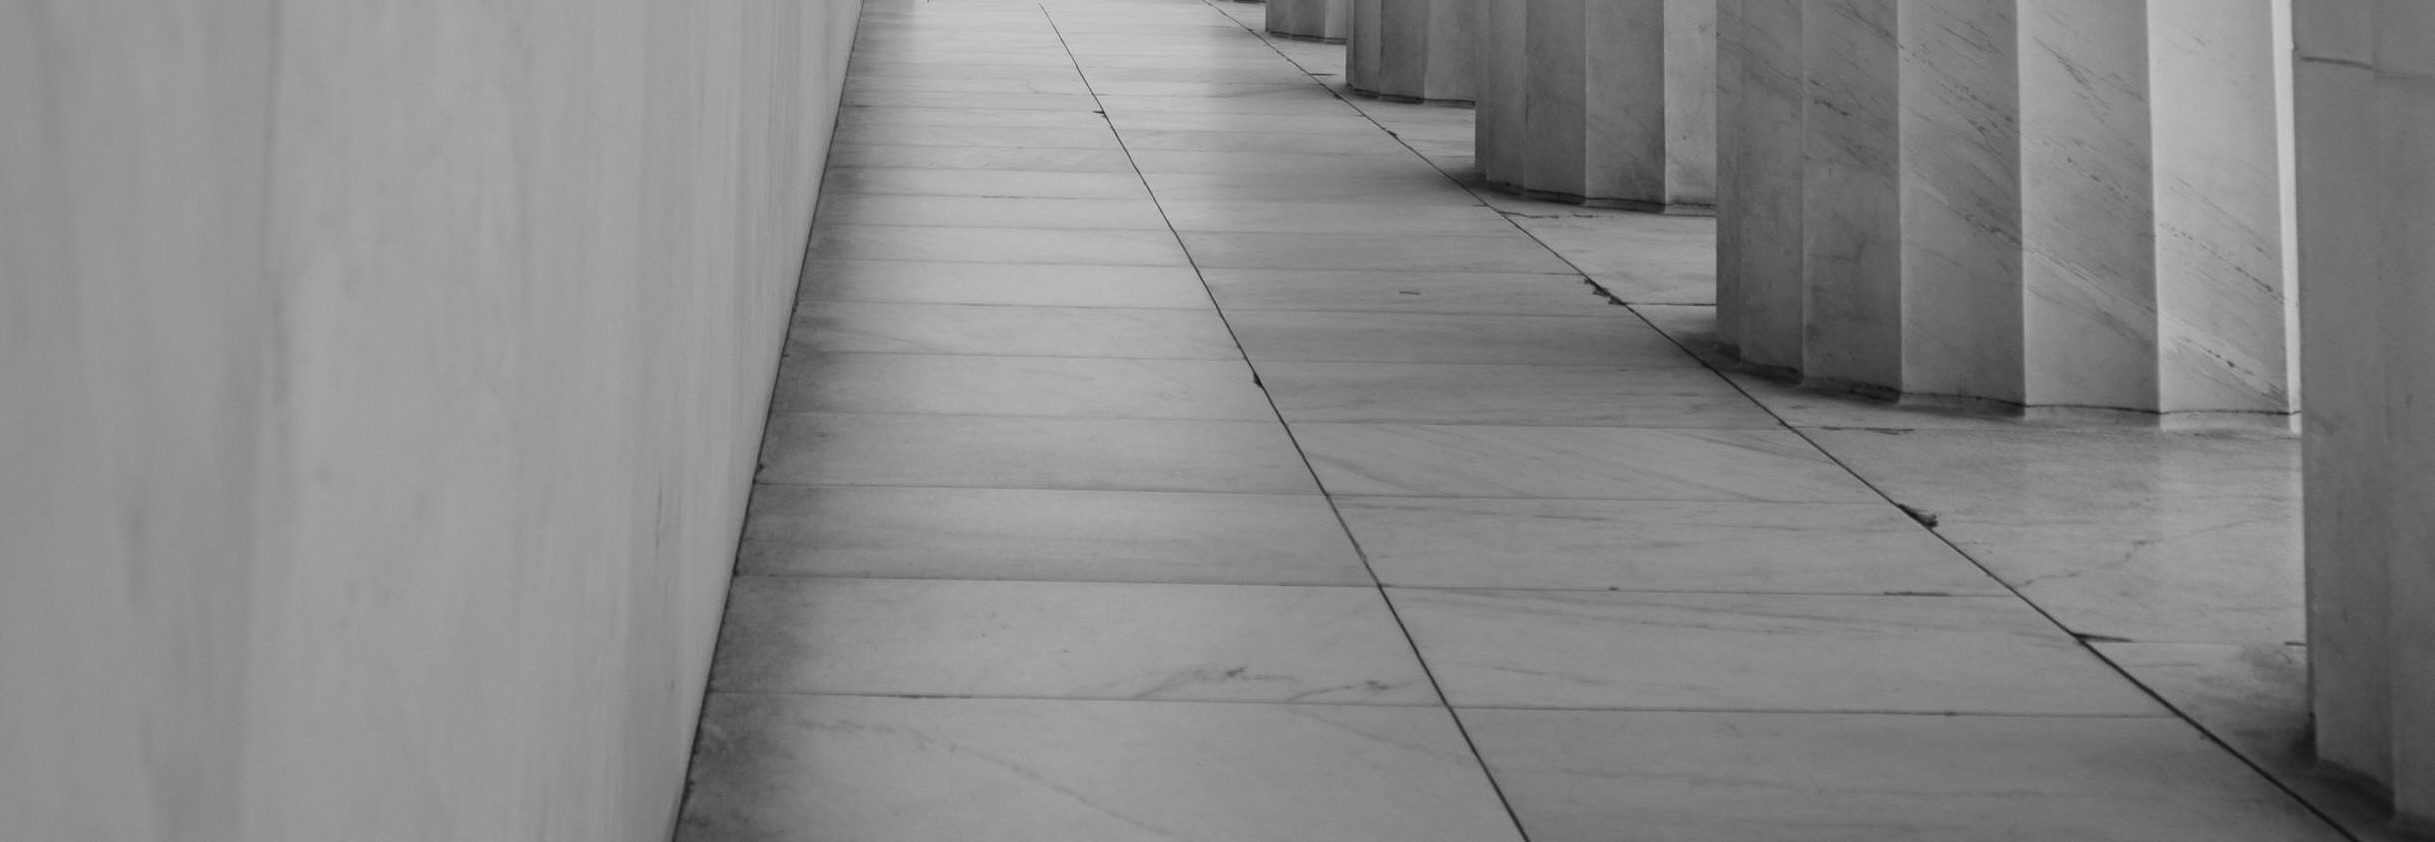 Ground and Pillars in Washington, D.C.